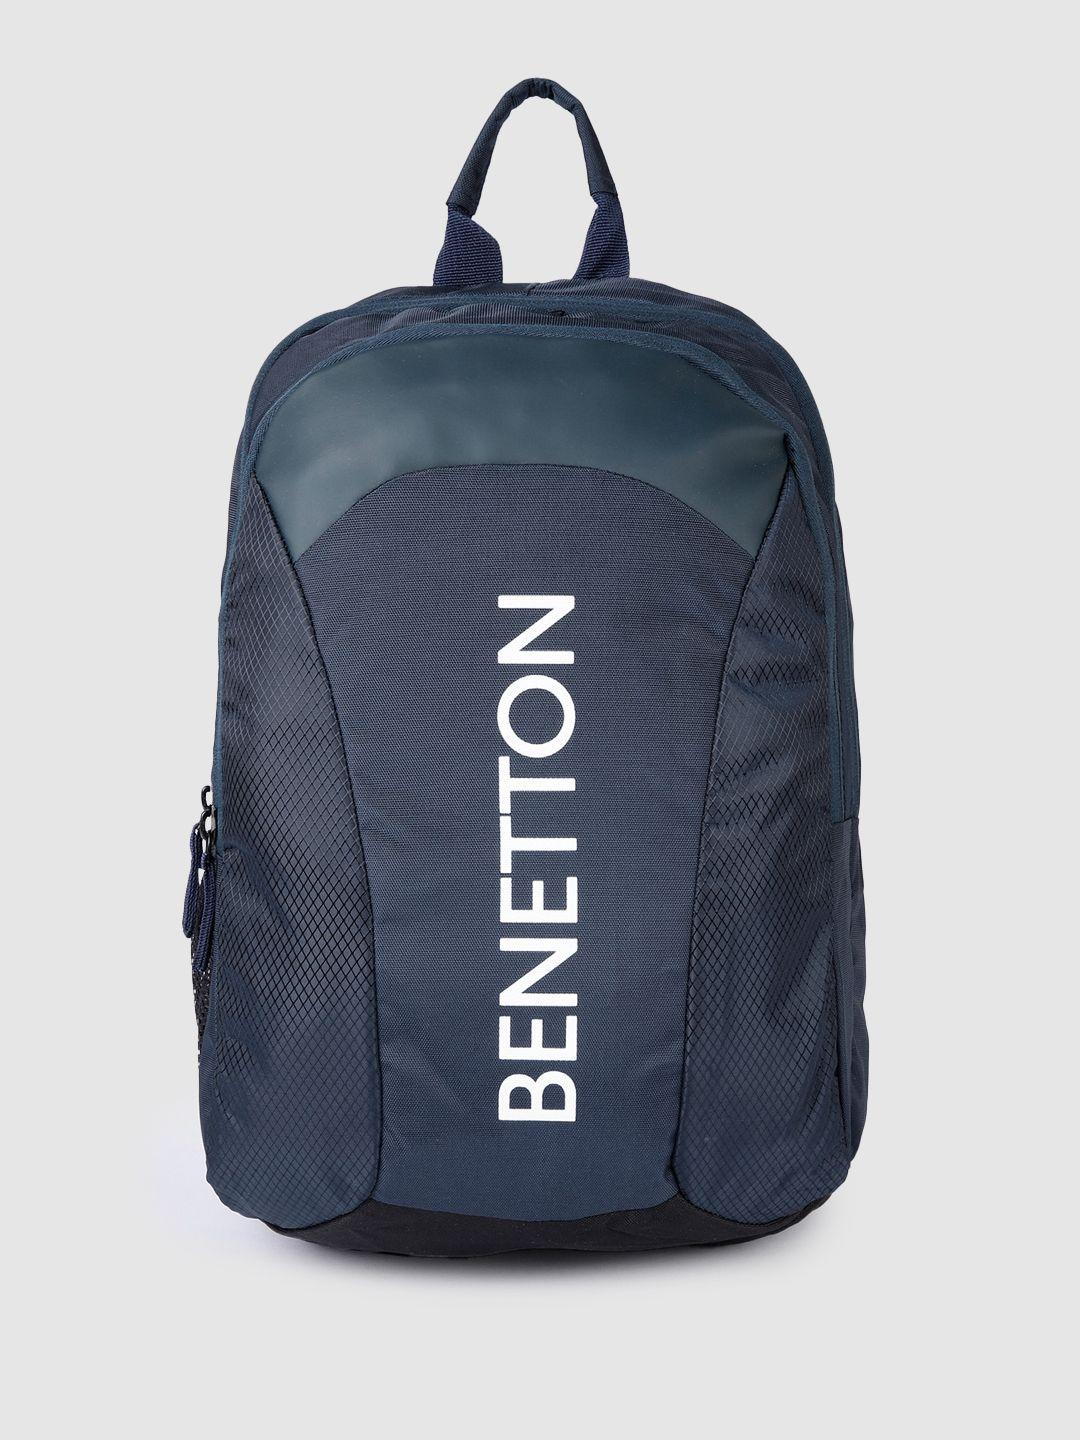 united colors of benetton brand logo backpack